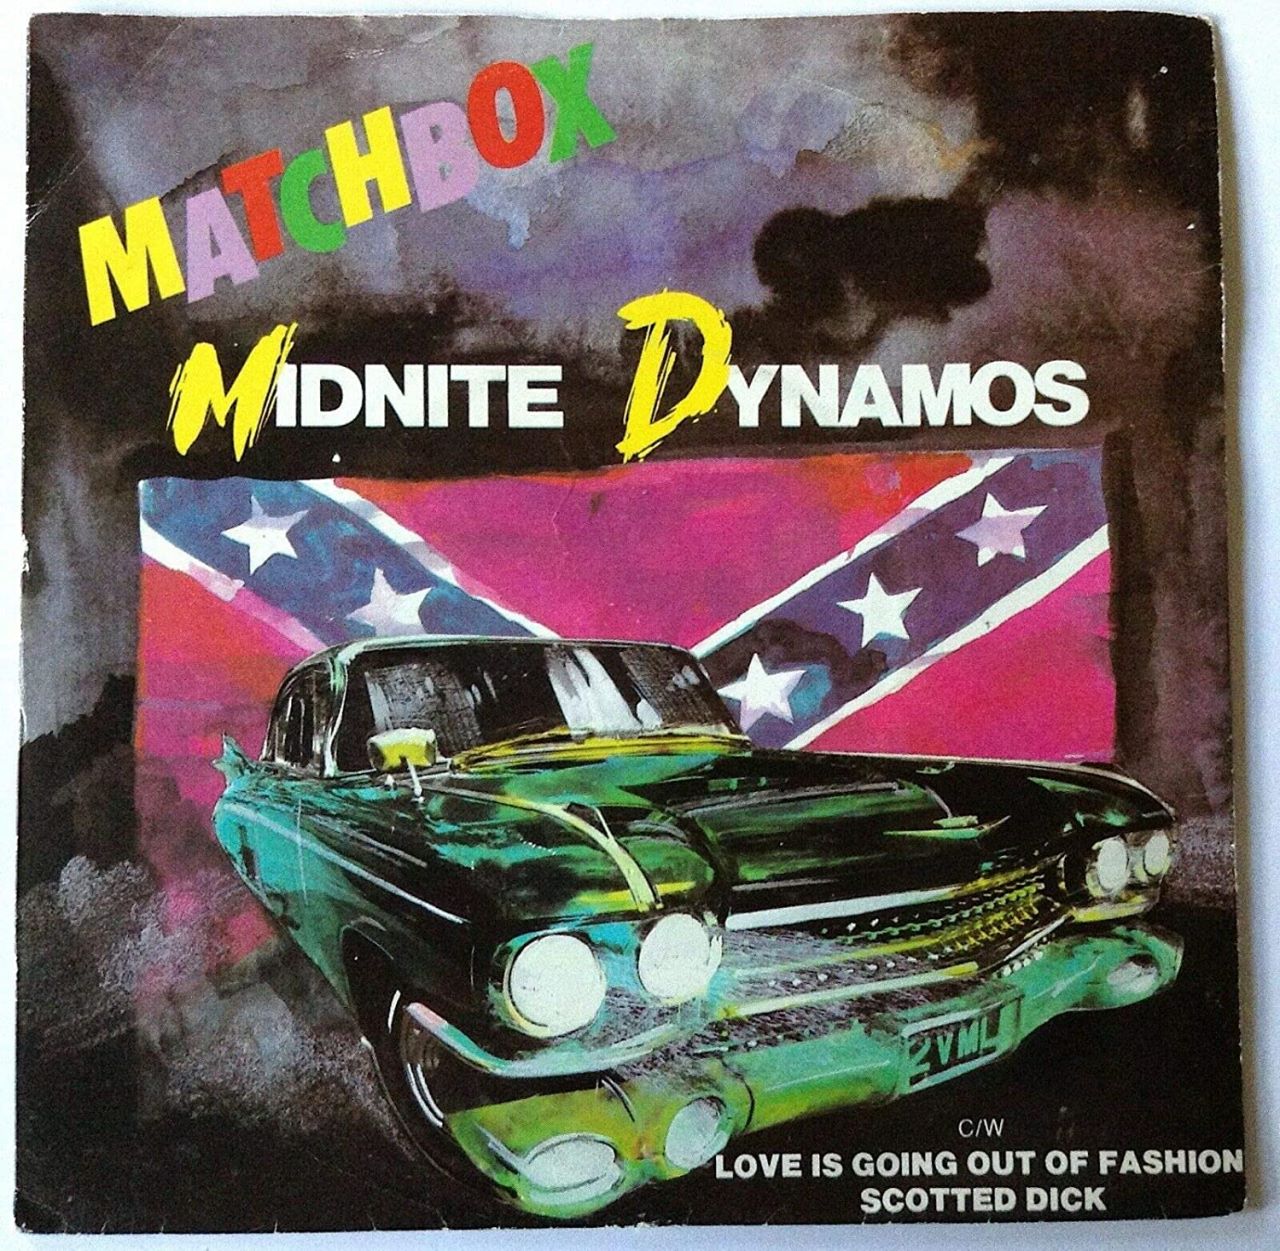 Matchbox - Midnite Dynamos cover album